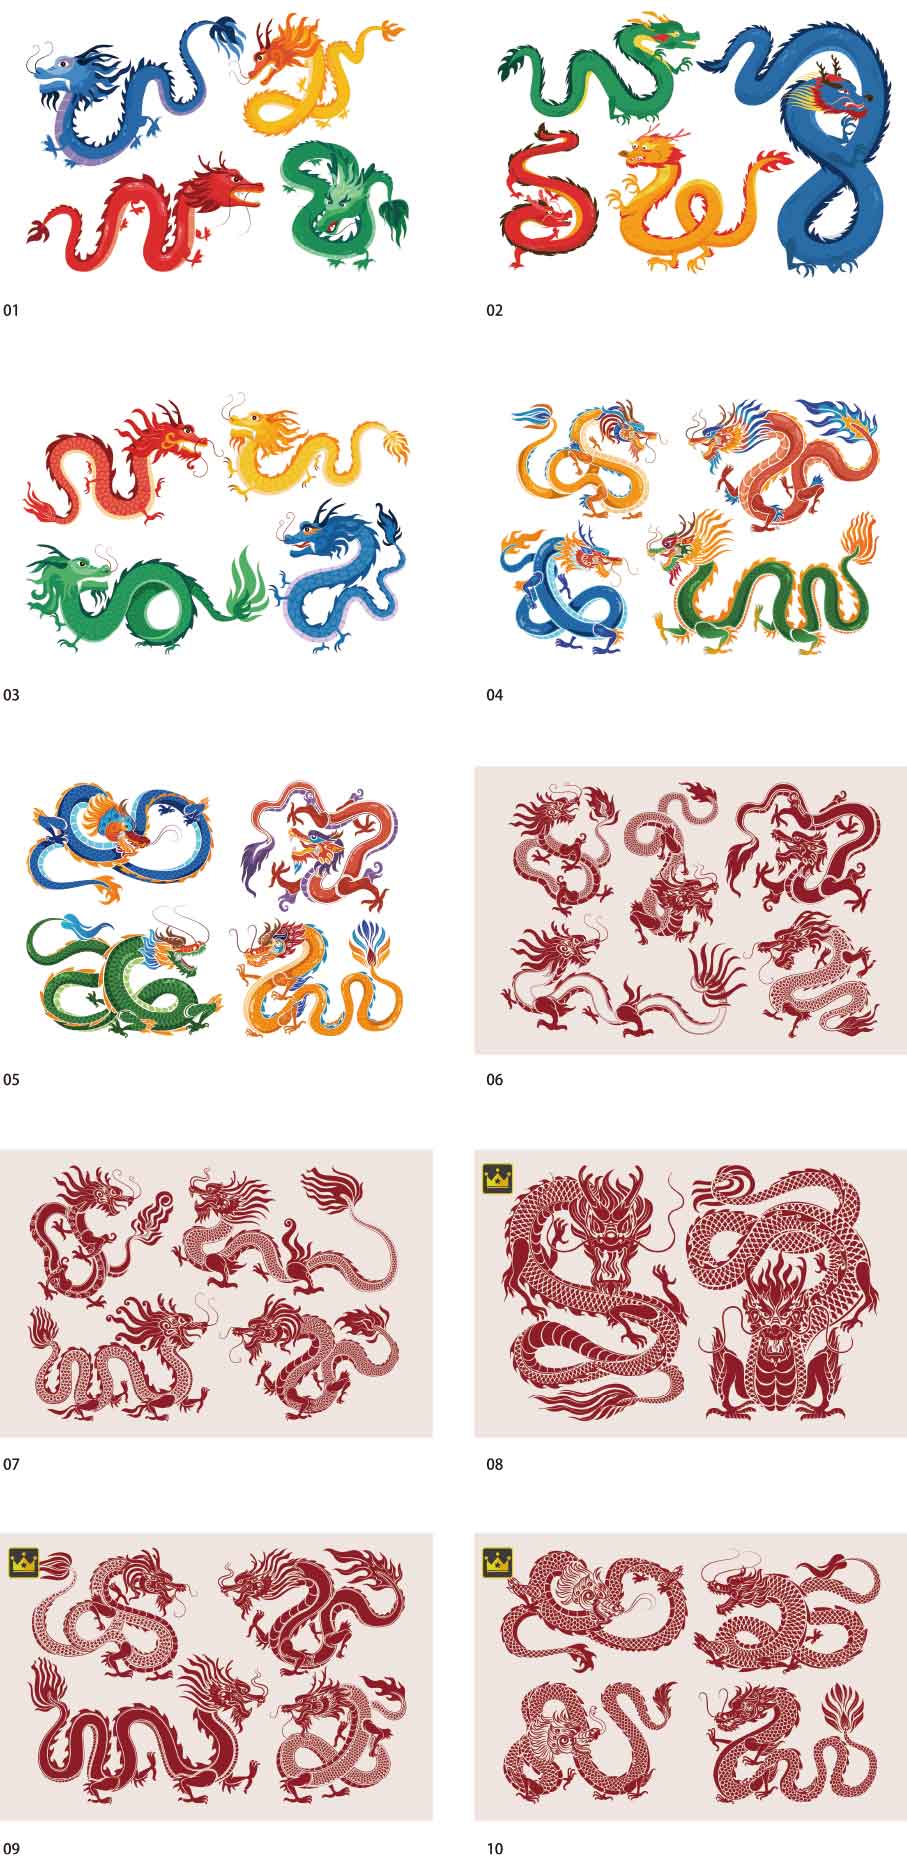 Dragon illustration collection